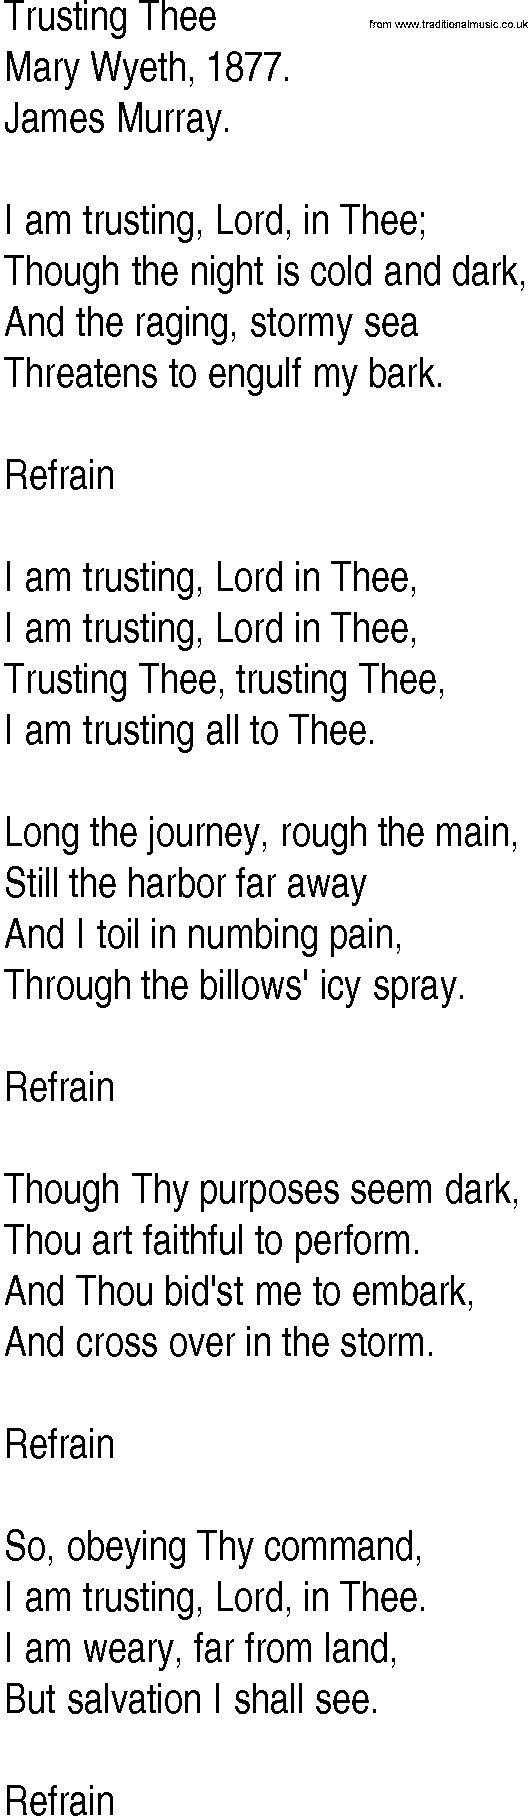 Hymn and Gospel Song: Trusting Thee by Mary Wyeth lyrics